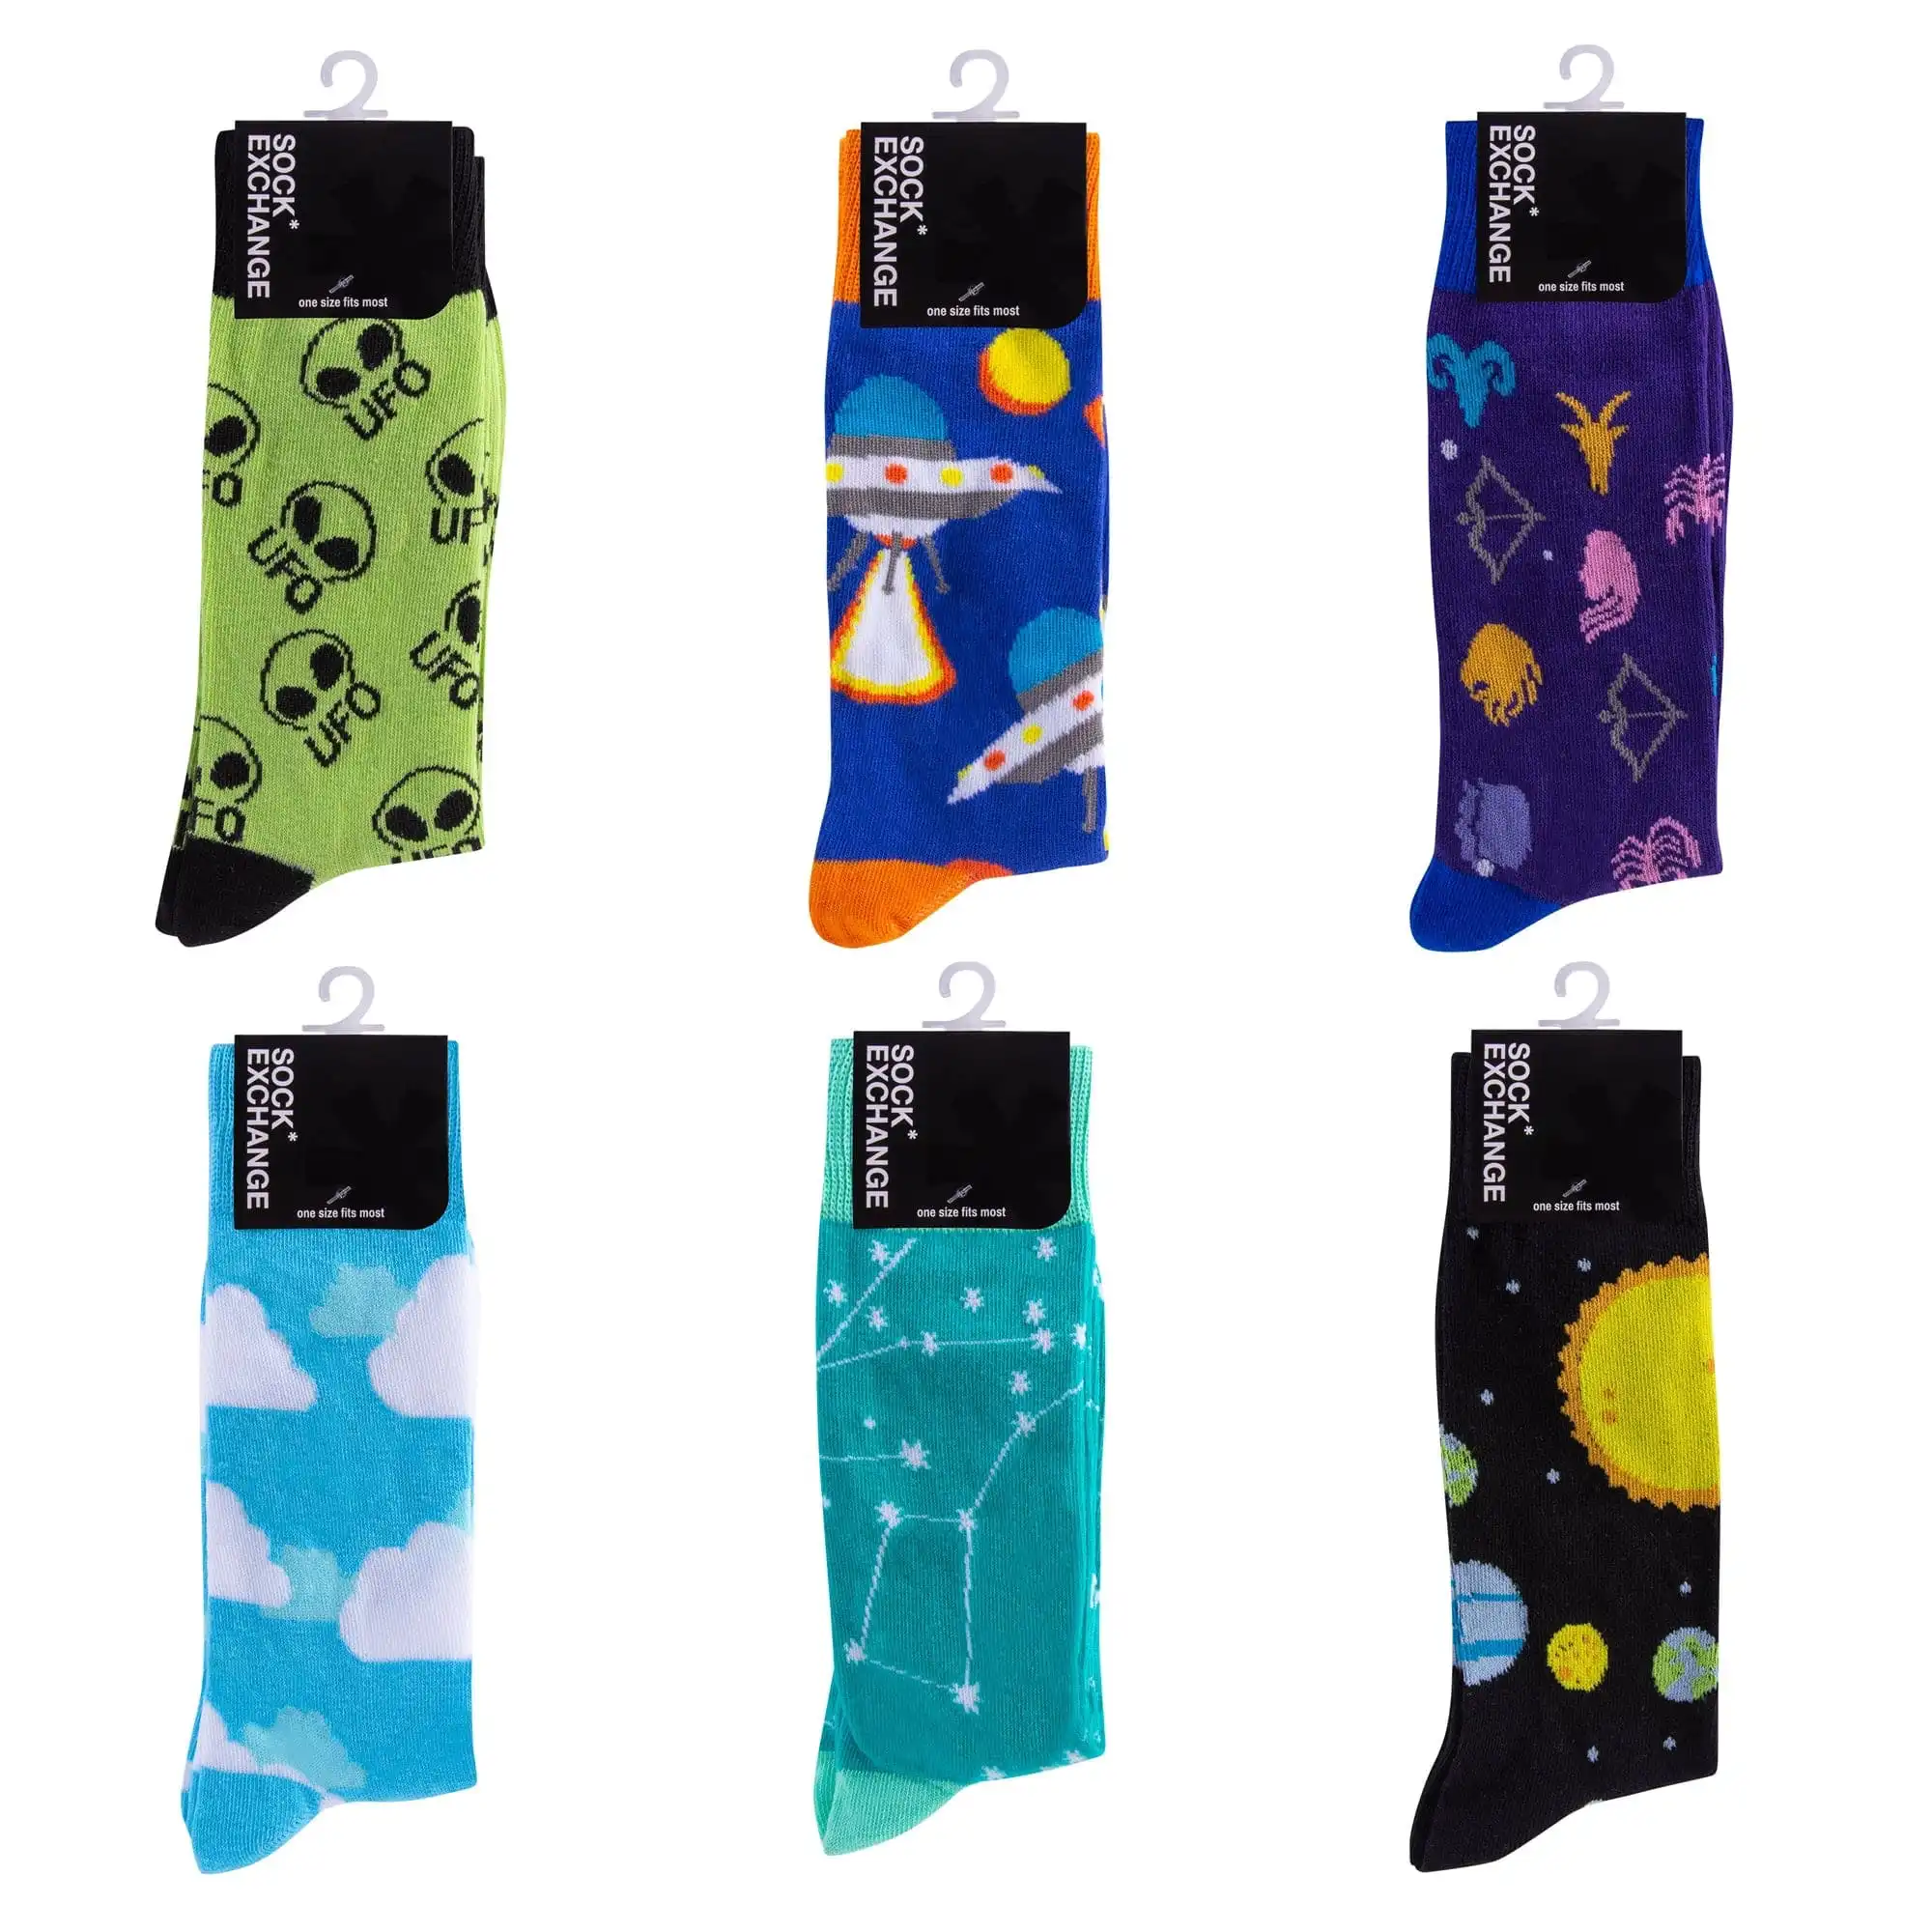 6 Pairs Fashion Novelty Funny Socks one Size 5-13 Men Socks Women Socks #6